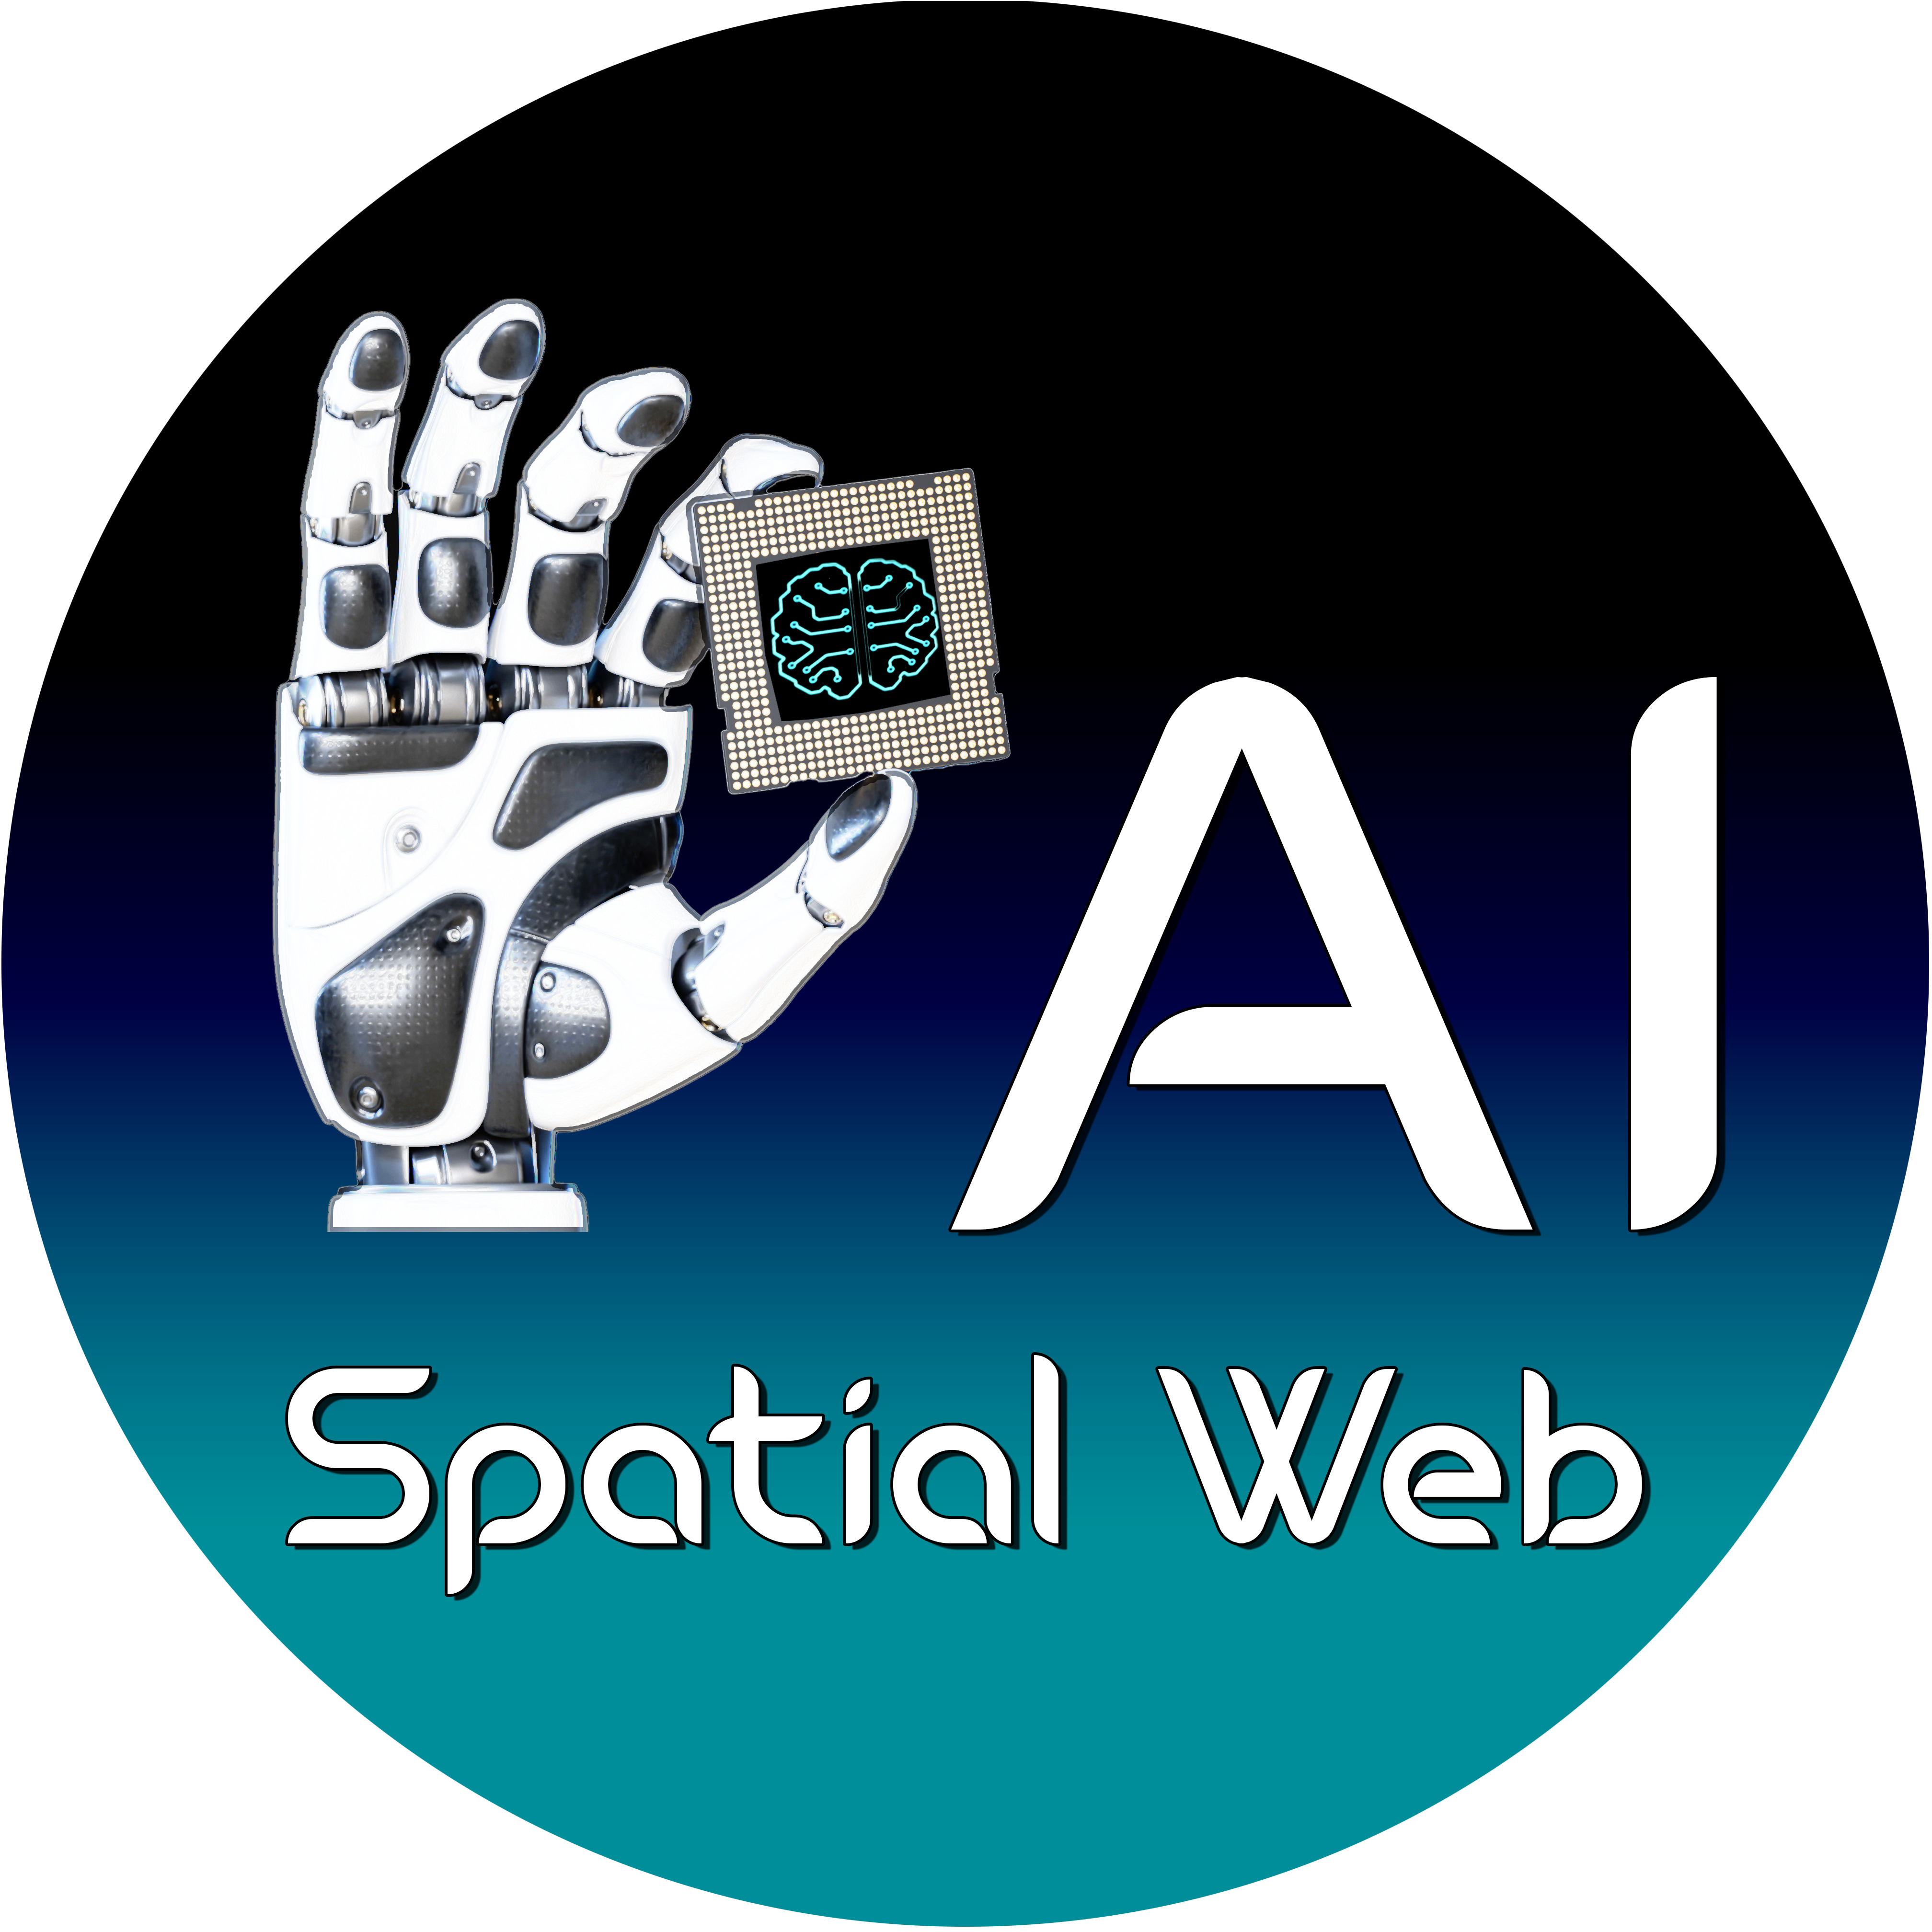 Spatial Web AI by Denise Holt